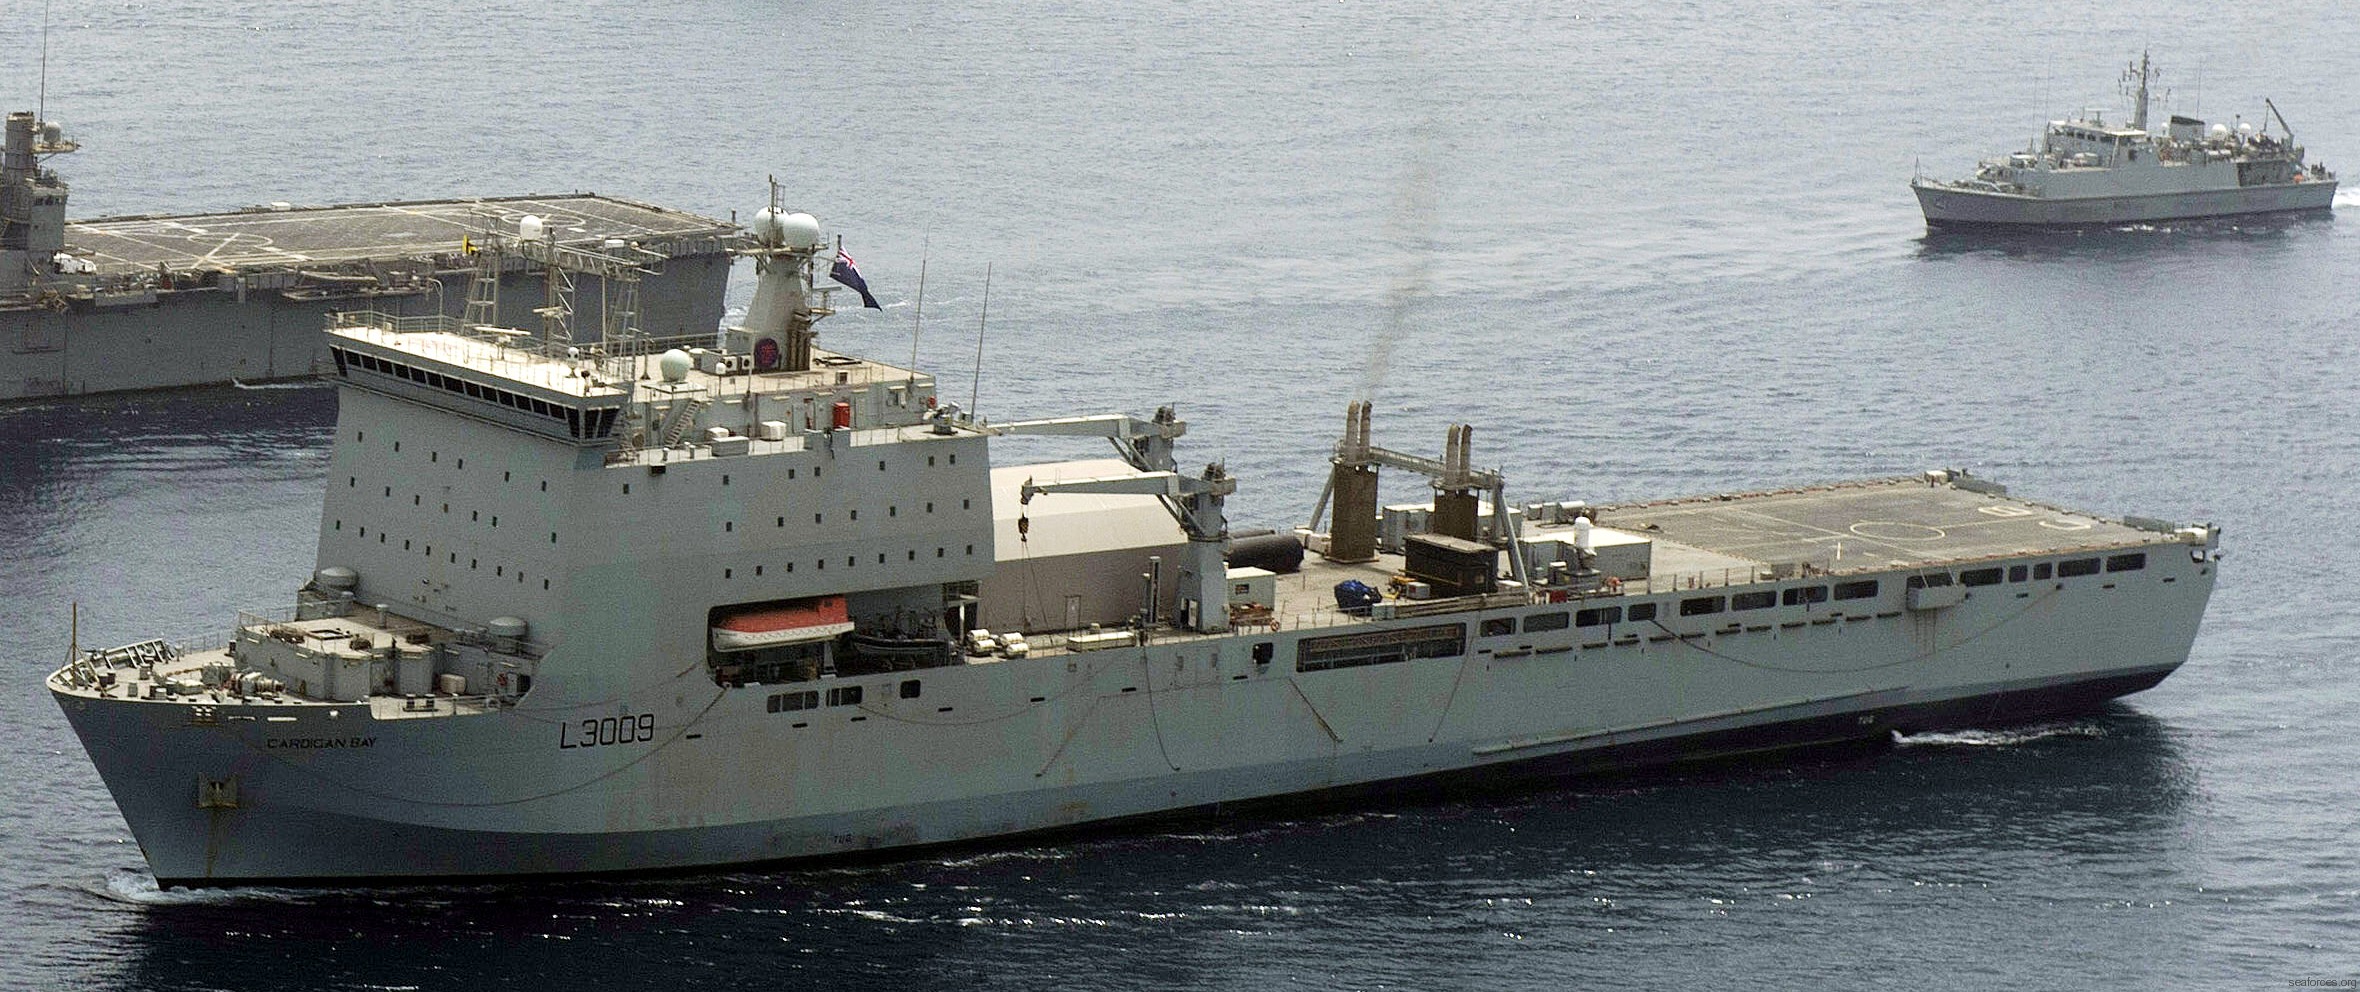 l-3009 rfa cardigan bay dock landing ship lsd royal fleet auxilary navy 09